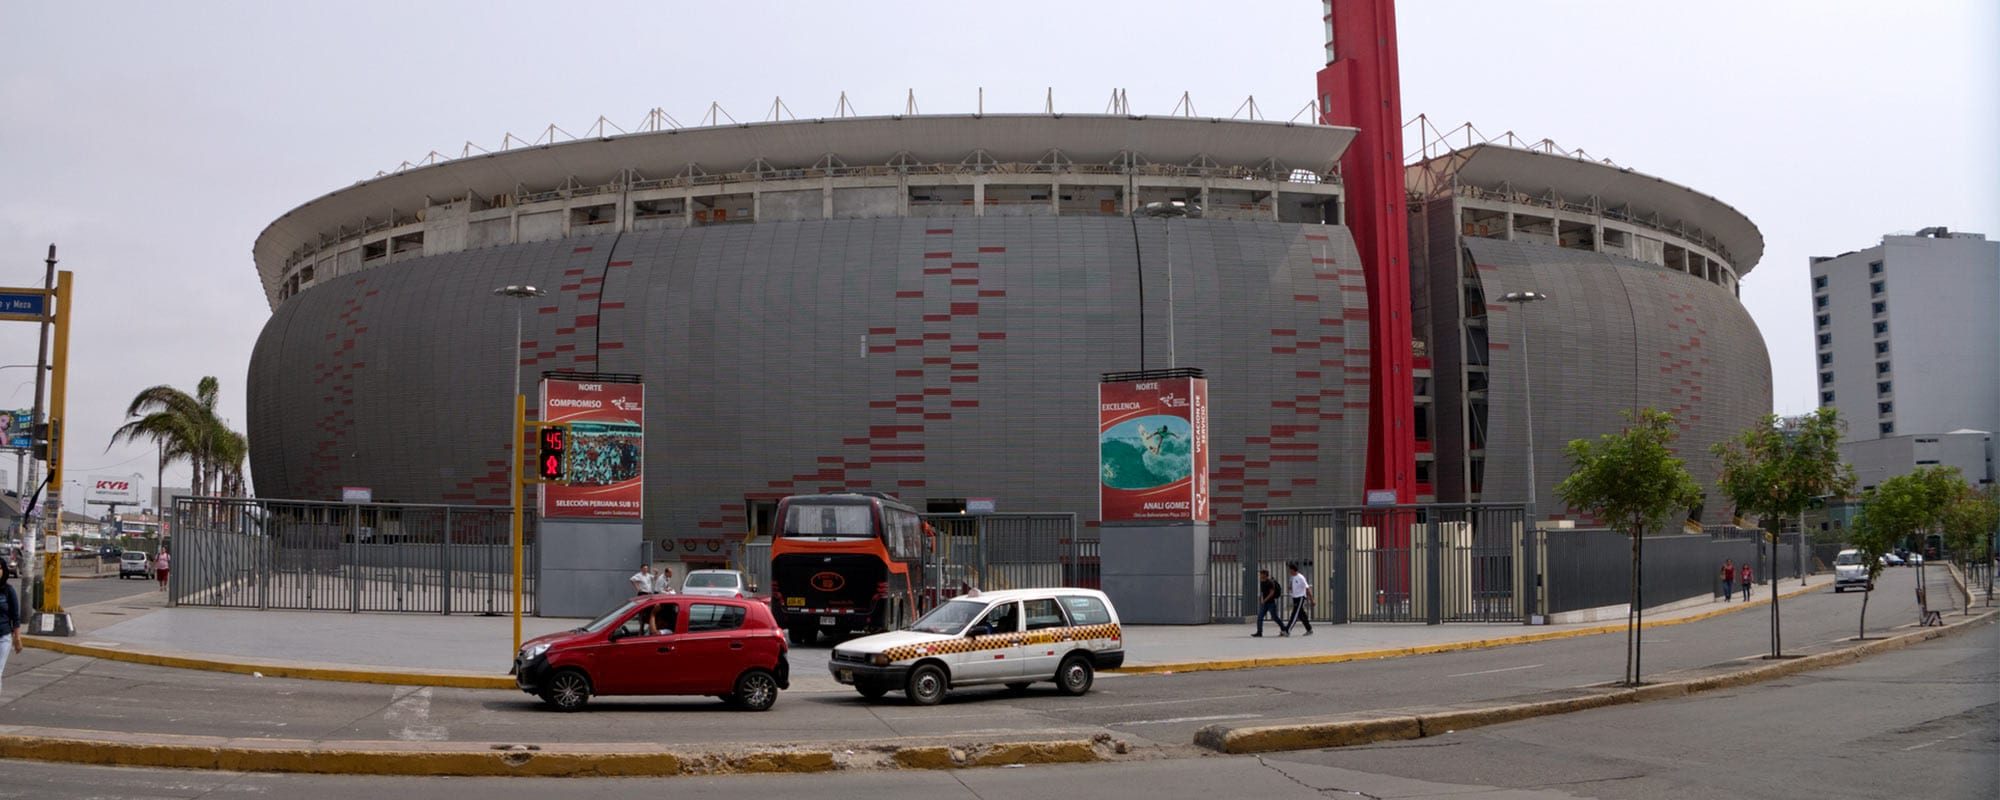 EXCEL SPORTS-Peru-Lima-Soccer Stadium